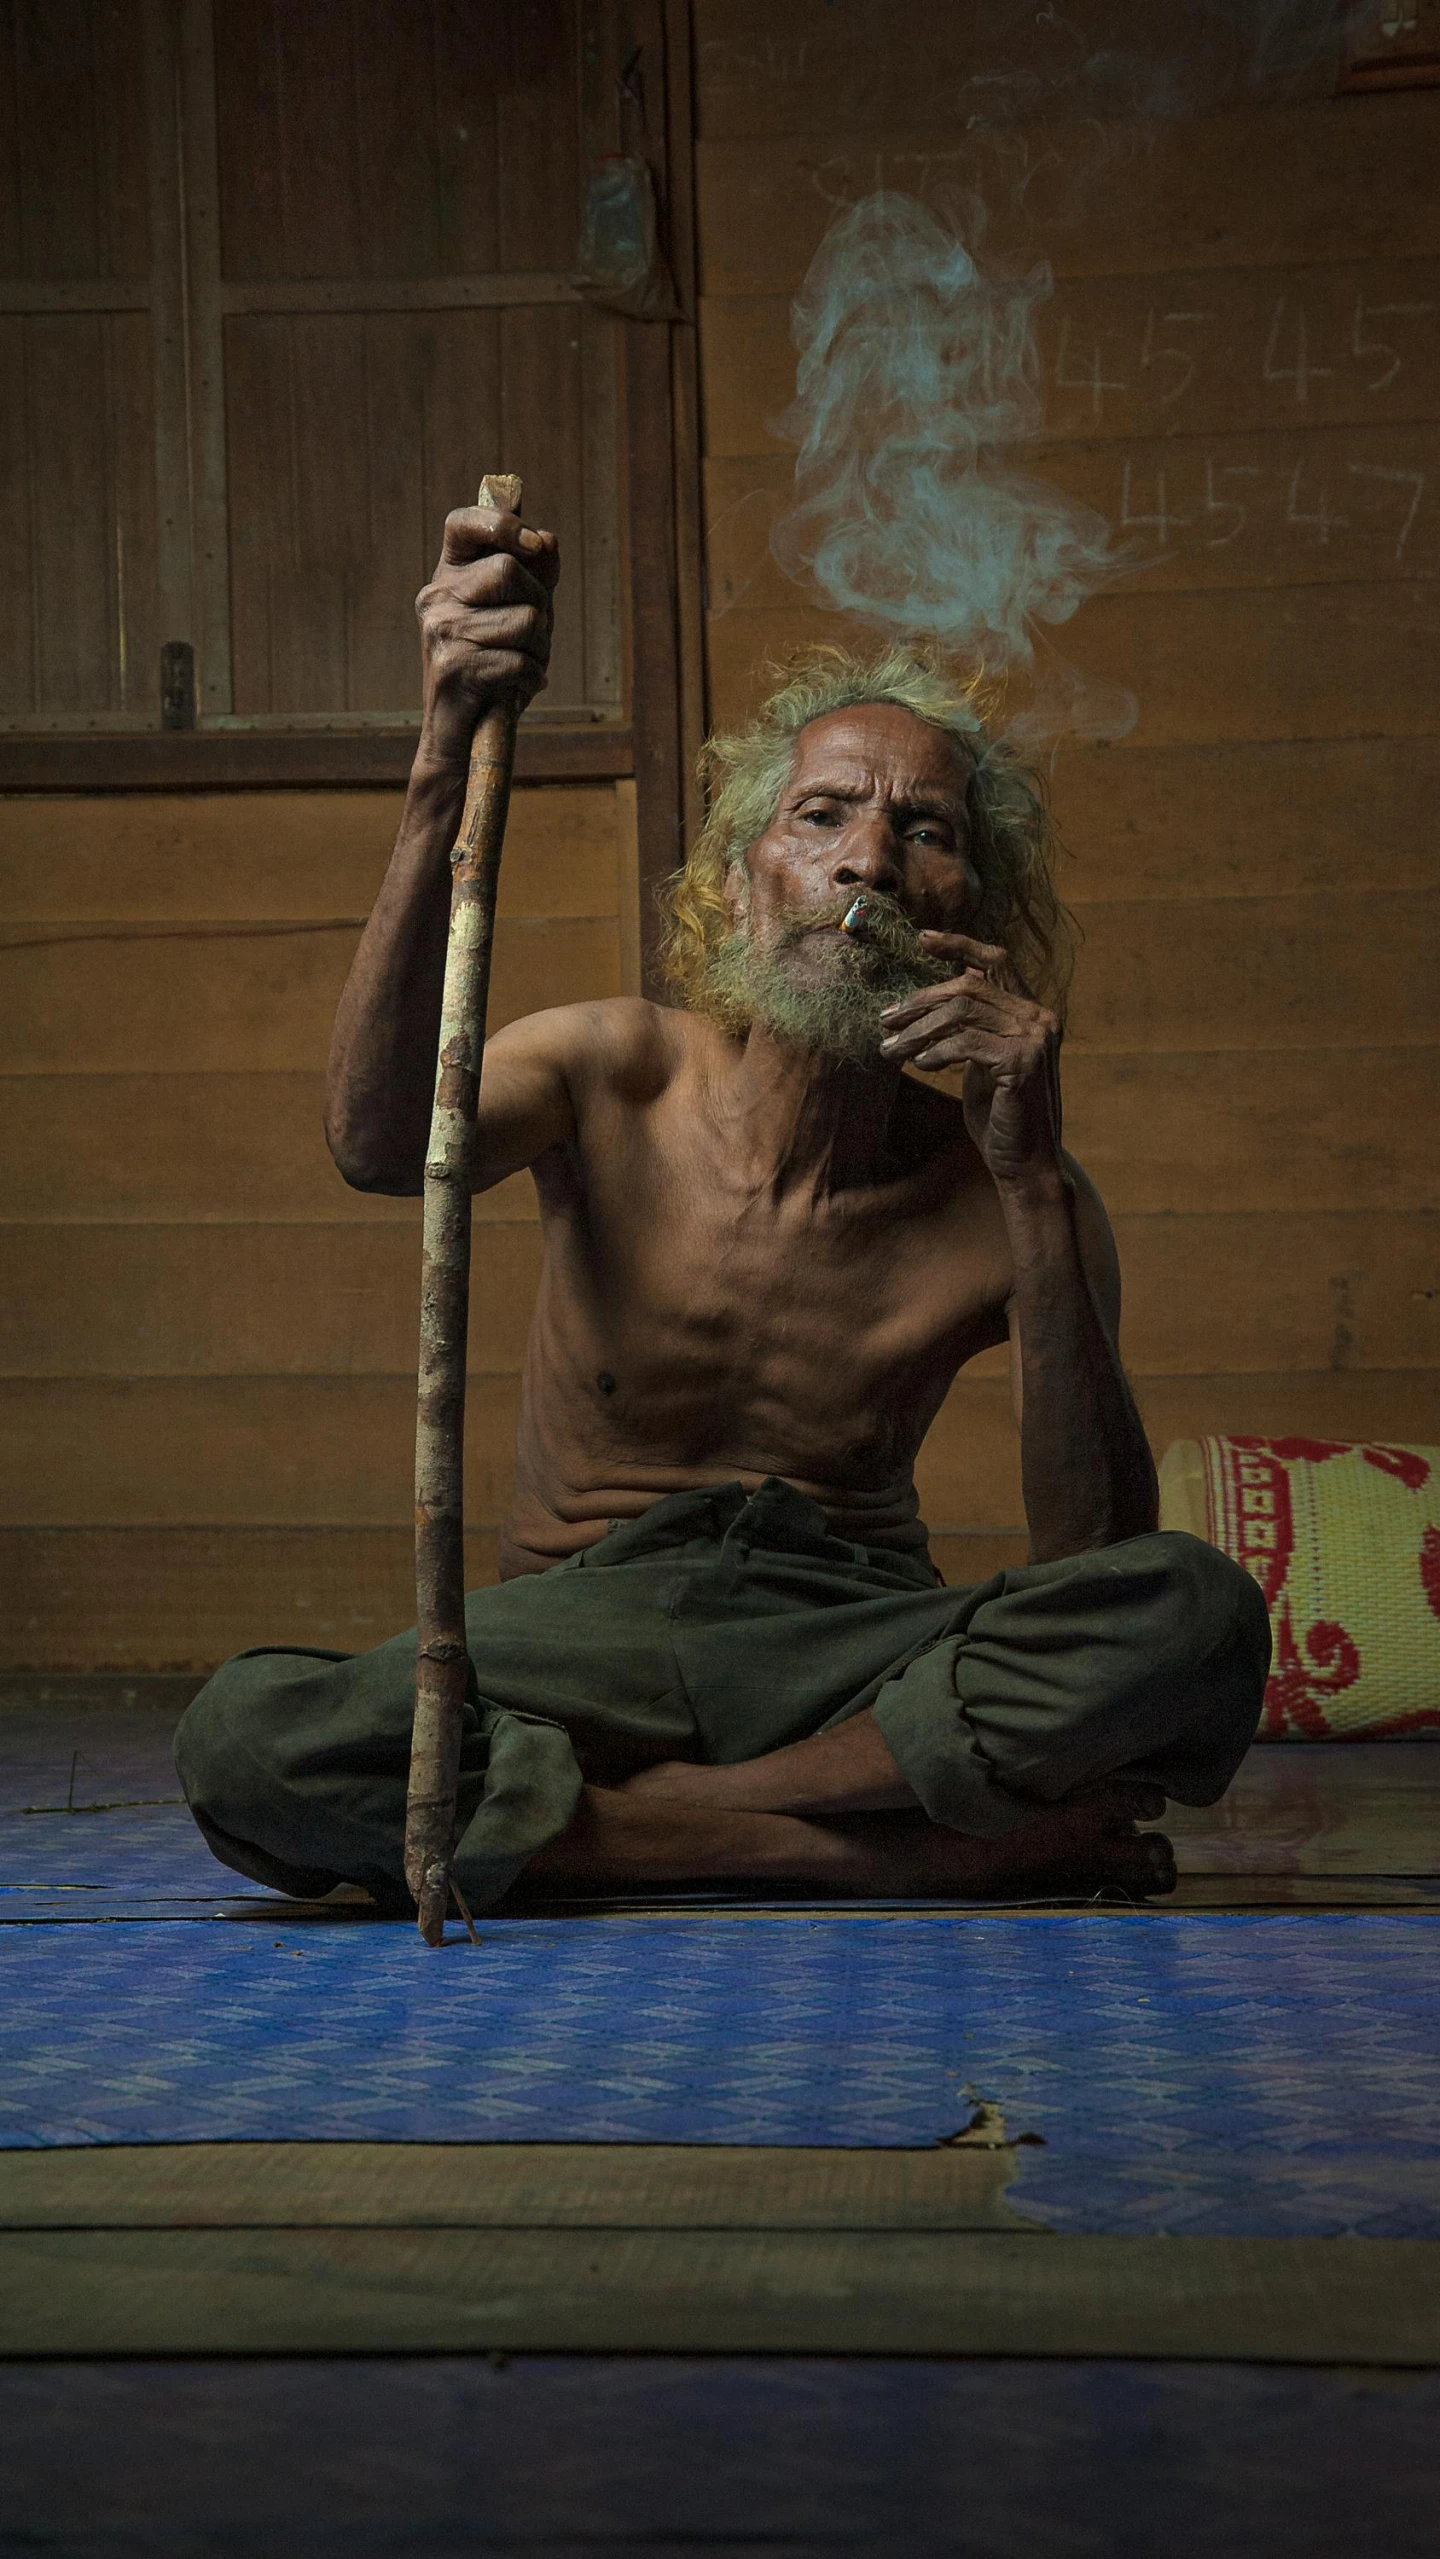 a man sitting on the floor smoking a cigarette, inspired by I Ketut Soki, pexels contest winner, sumatraism, a photo of a disheveled man, holding walking stick, paul barson, padmasana